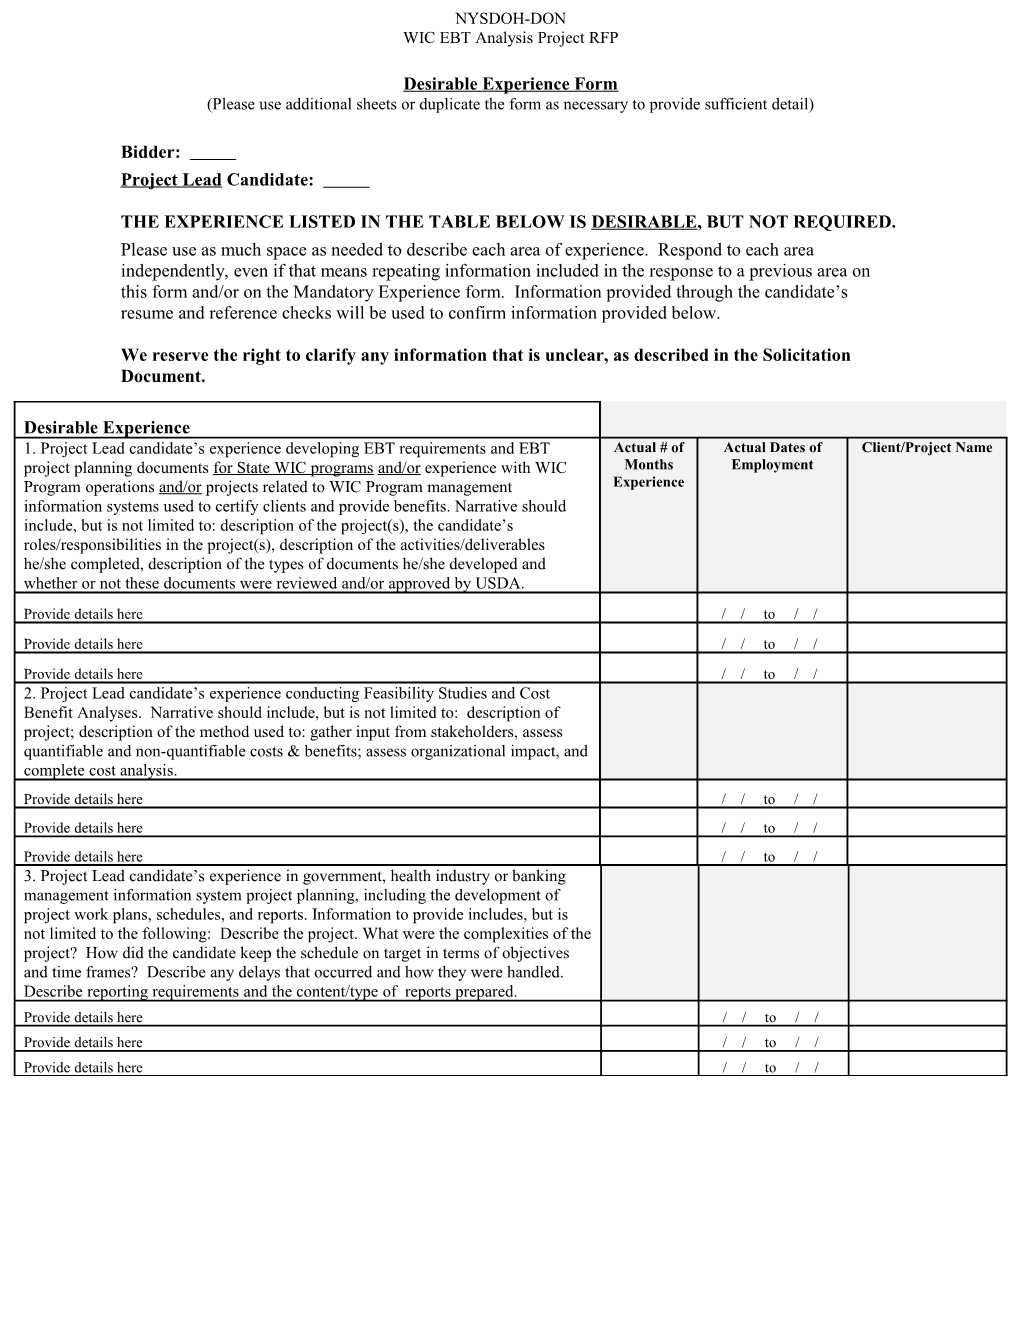 Miscellaneous RFP/Servicxes Contract Document